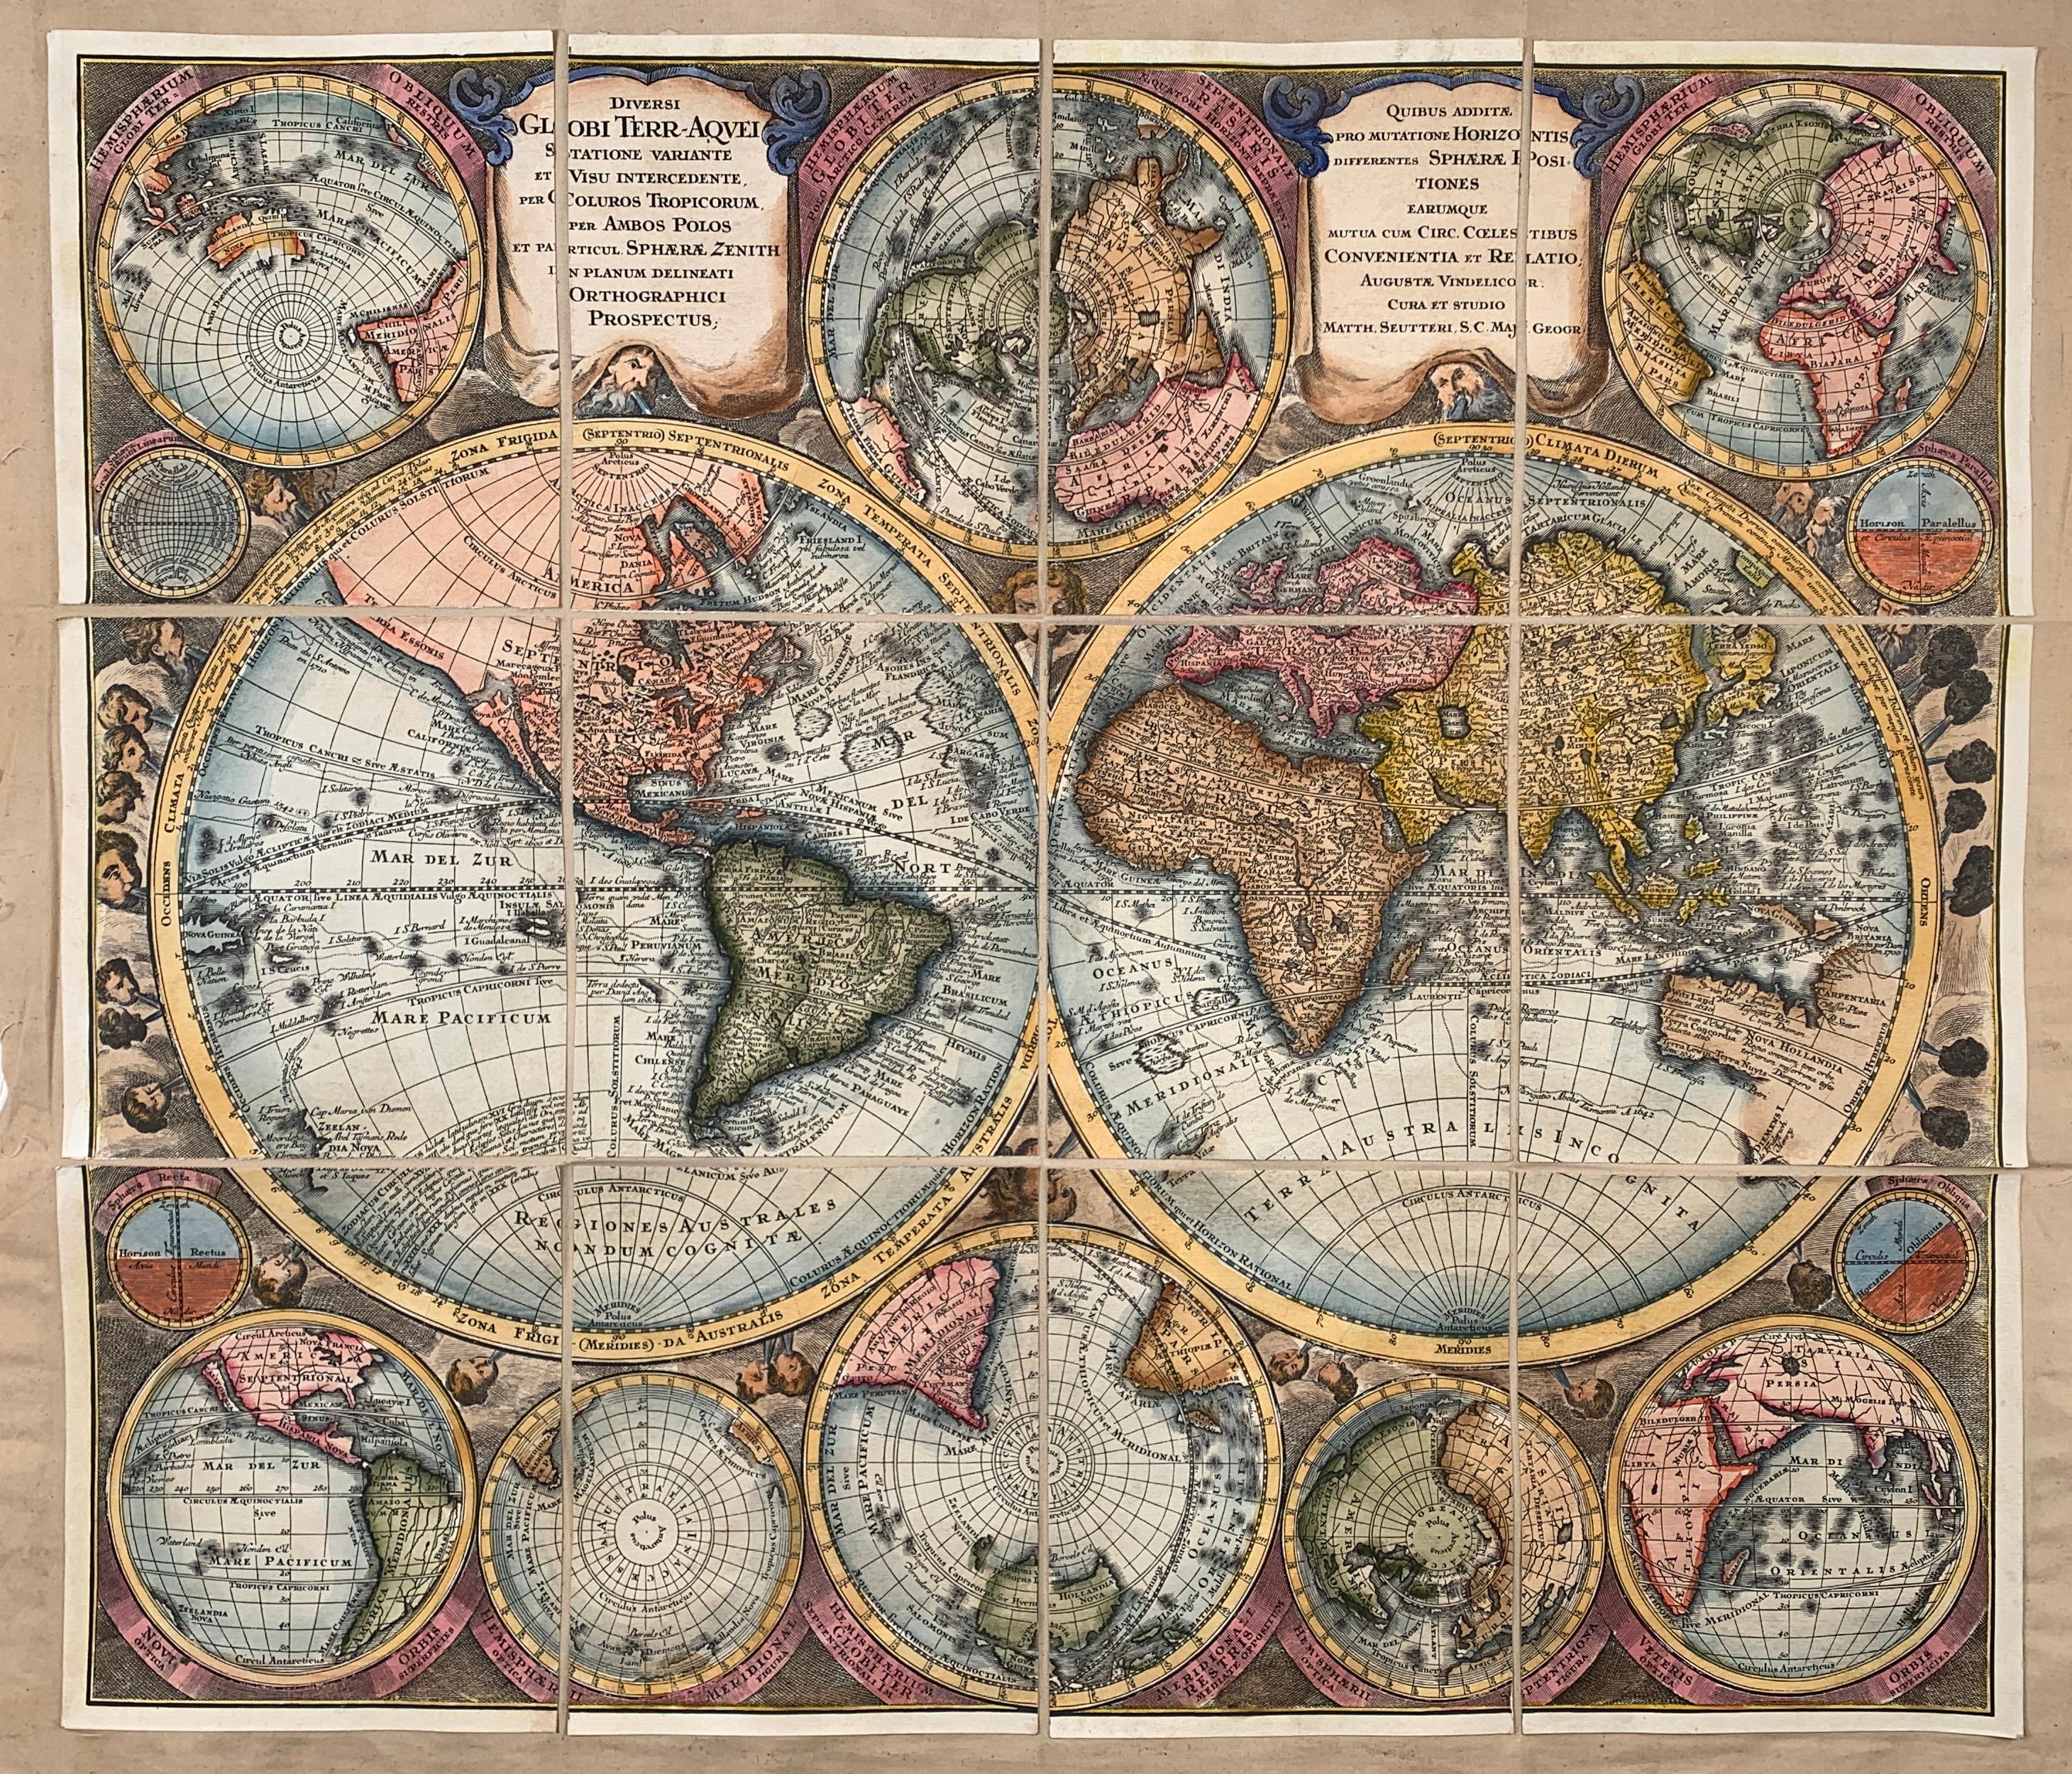 World Map entitled "Diversi Globi Terr-Aquei Statione Variante" by Seutter - Print by Mathew Seuter